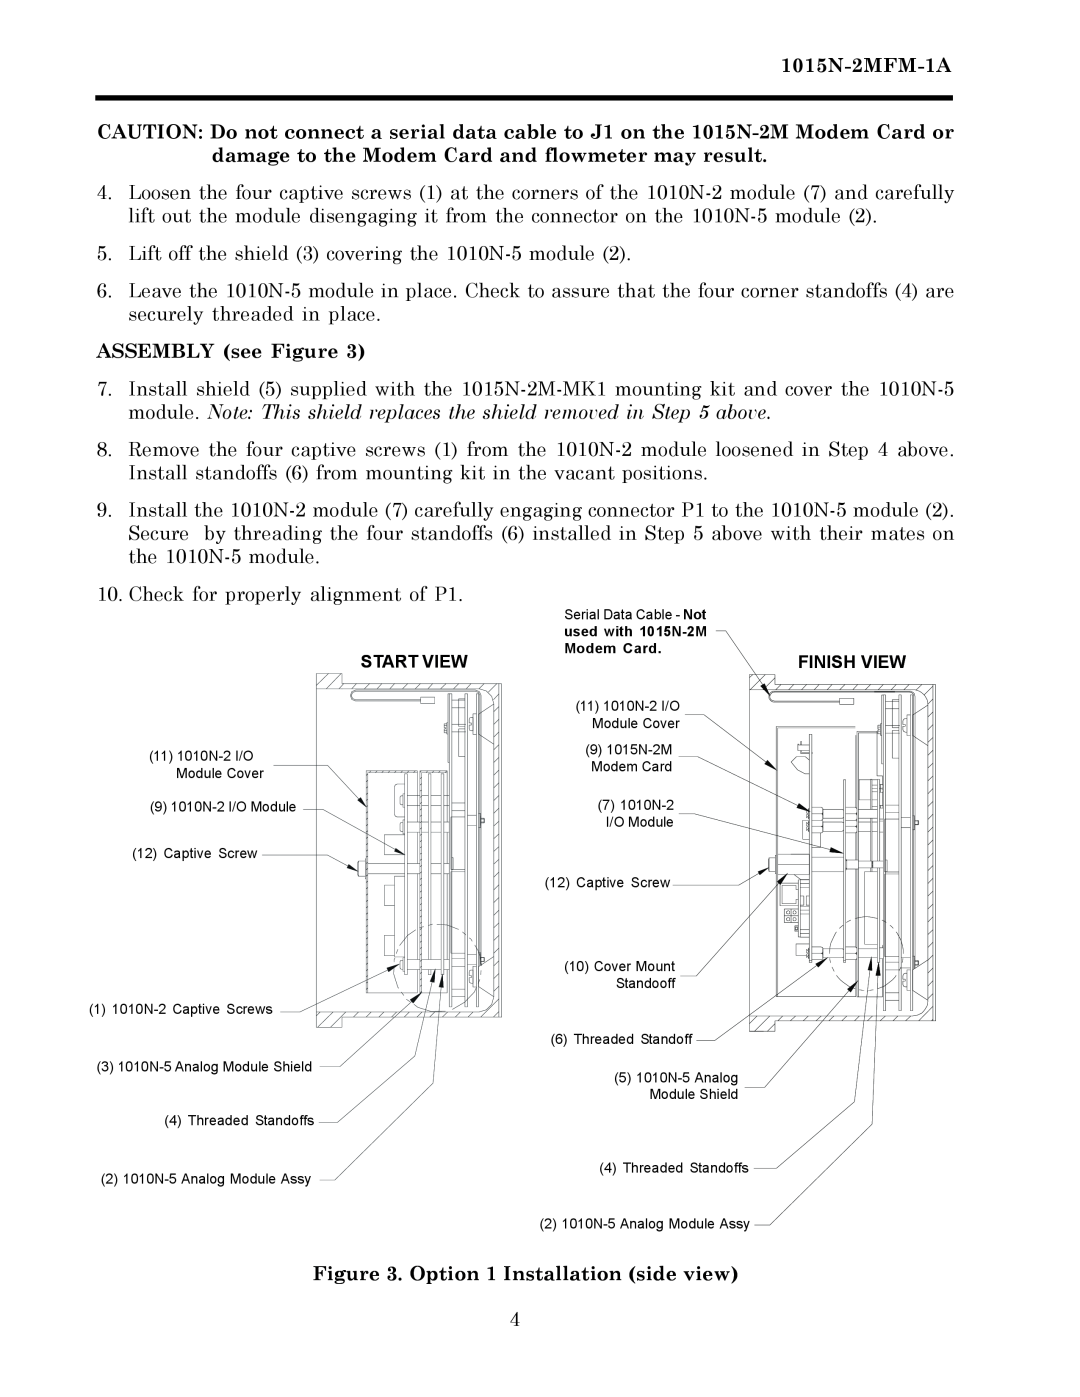 Siemens 1015N-2MFM-1A manual Start View, Finish View 